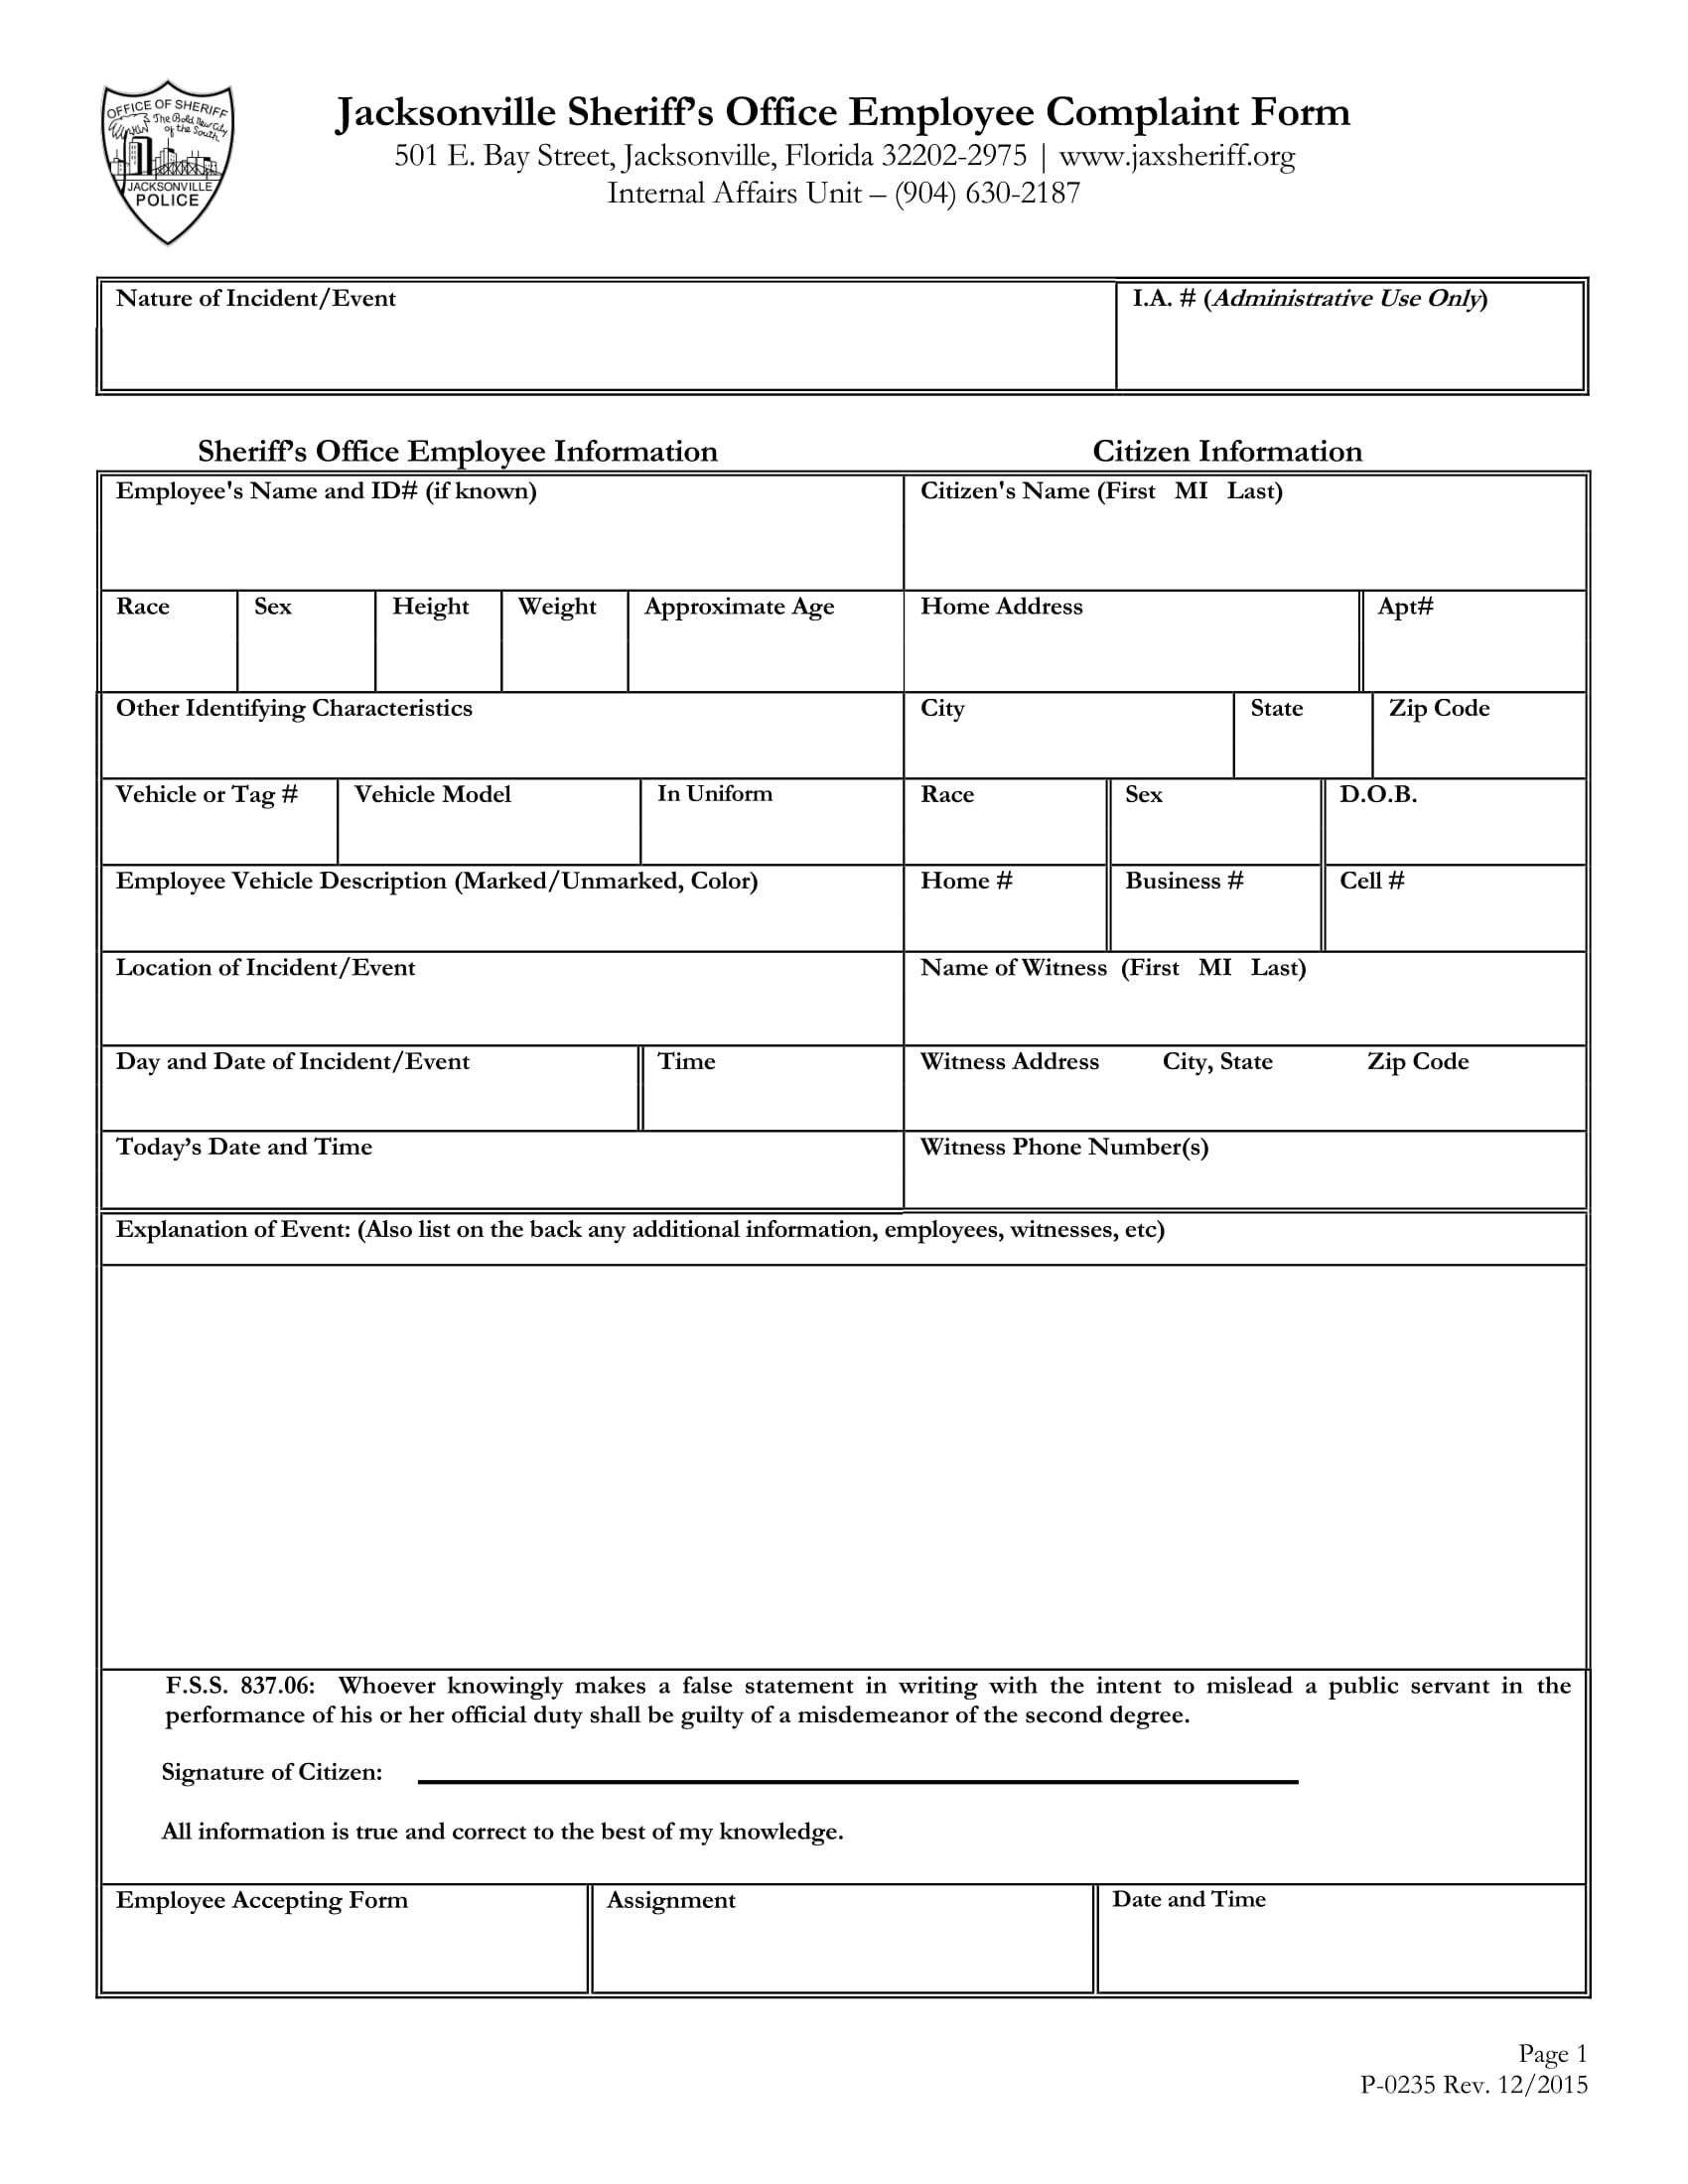 sheriffs office employee complaint form 1